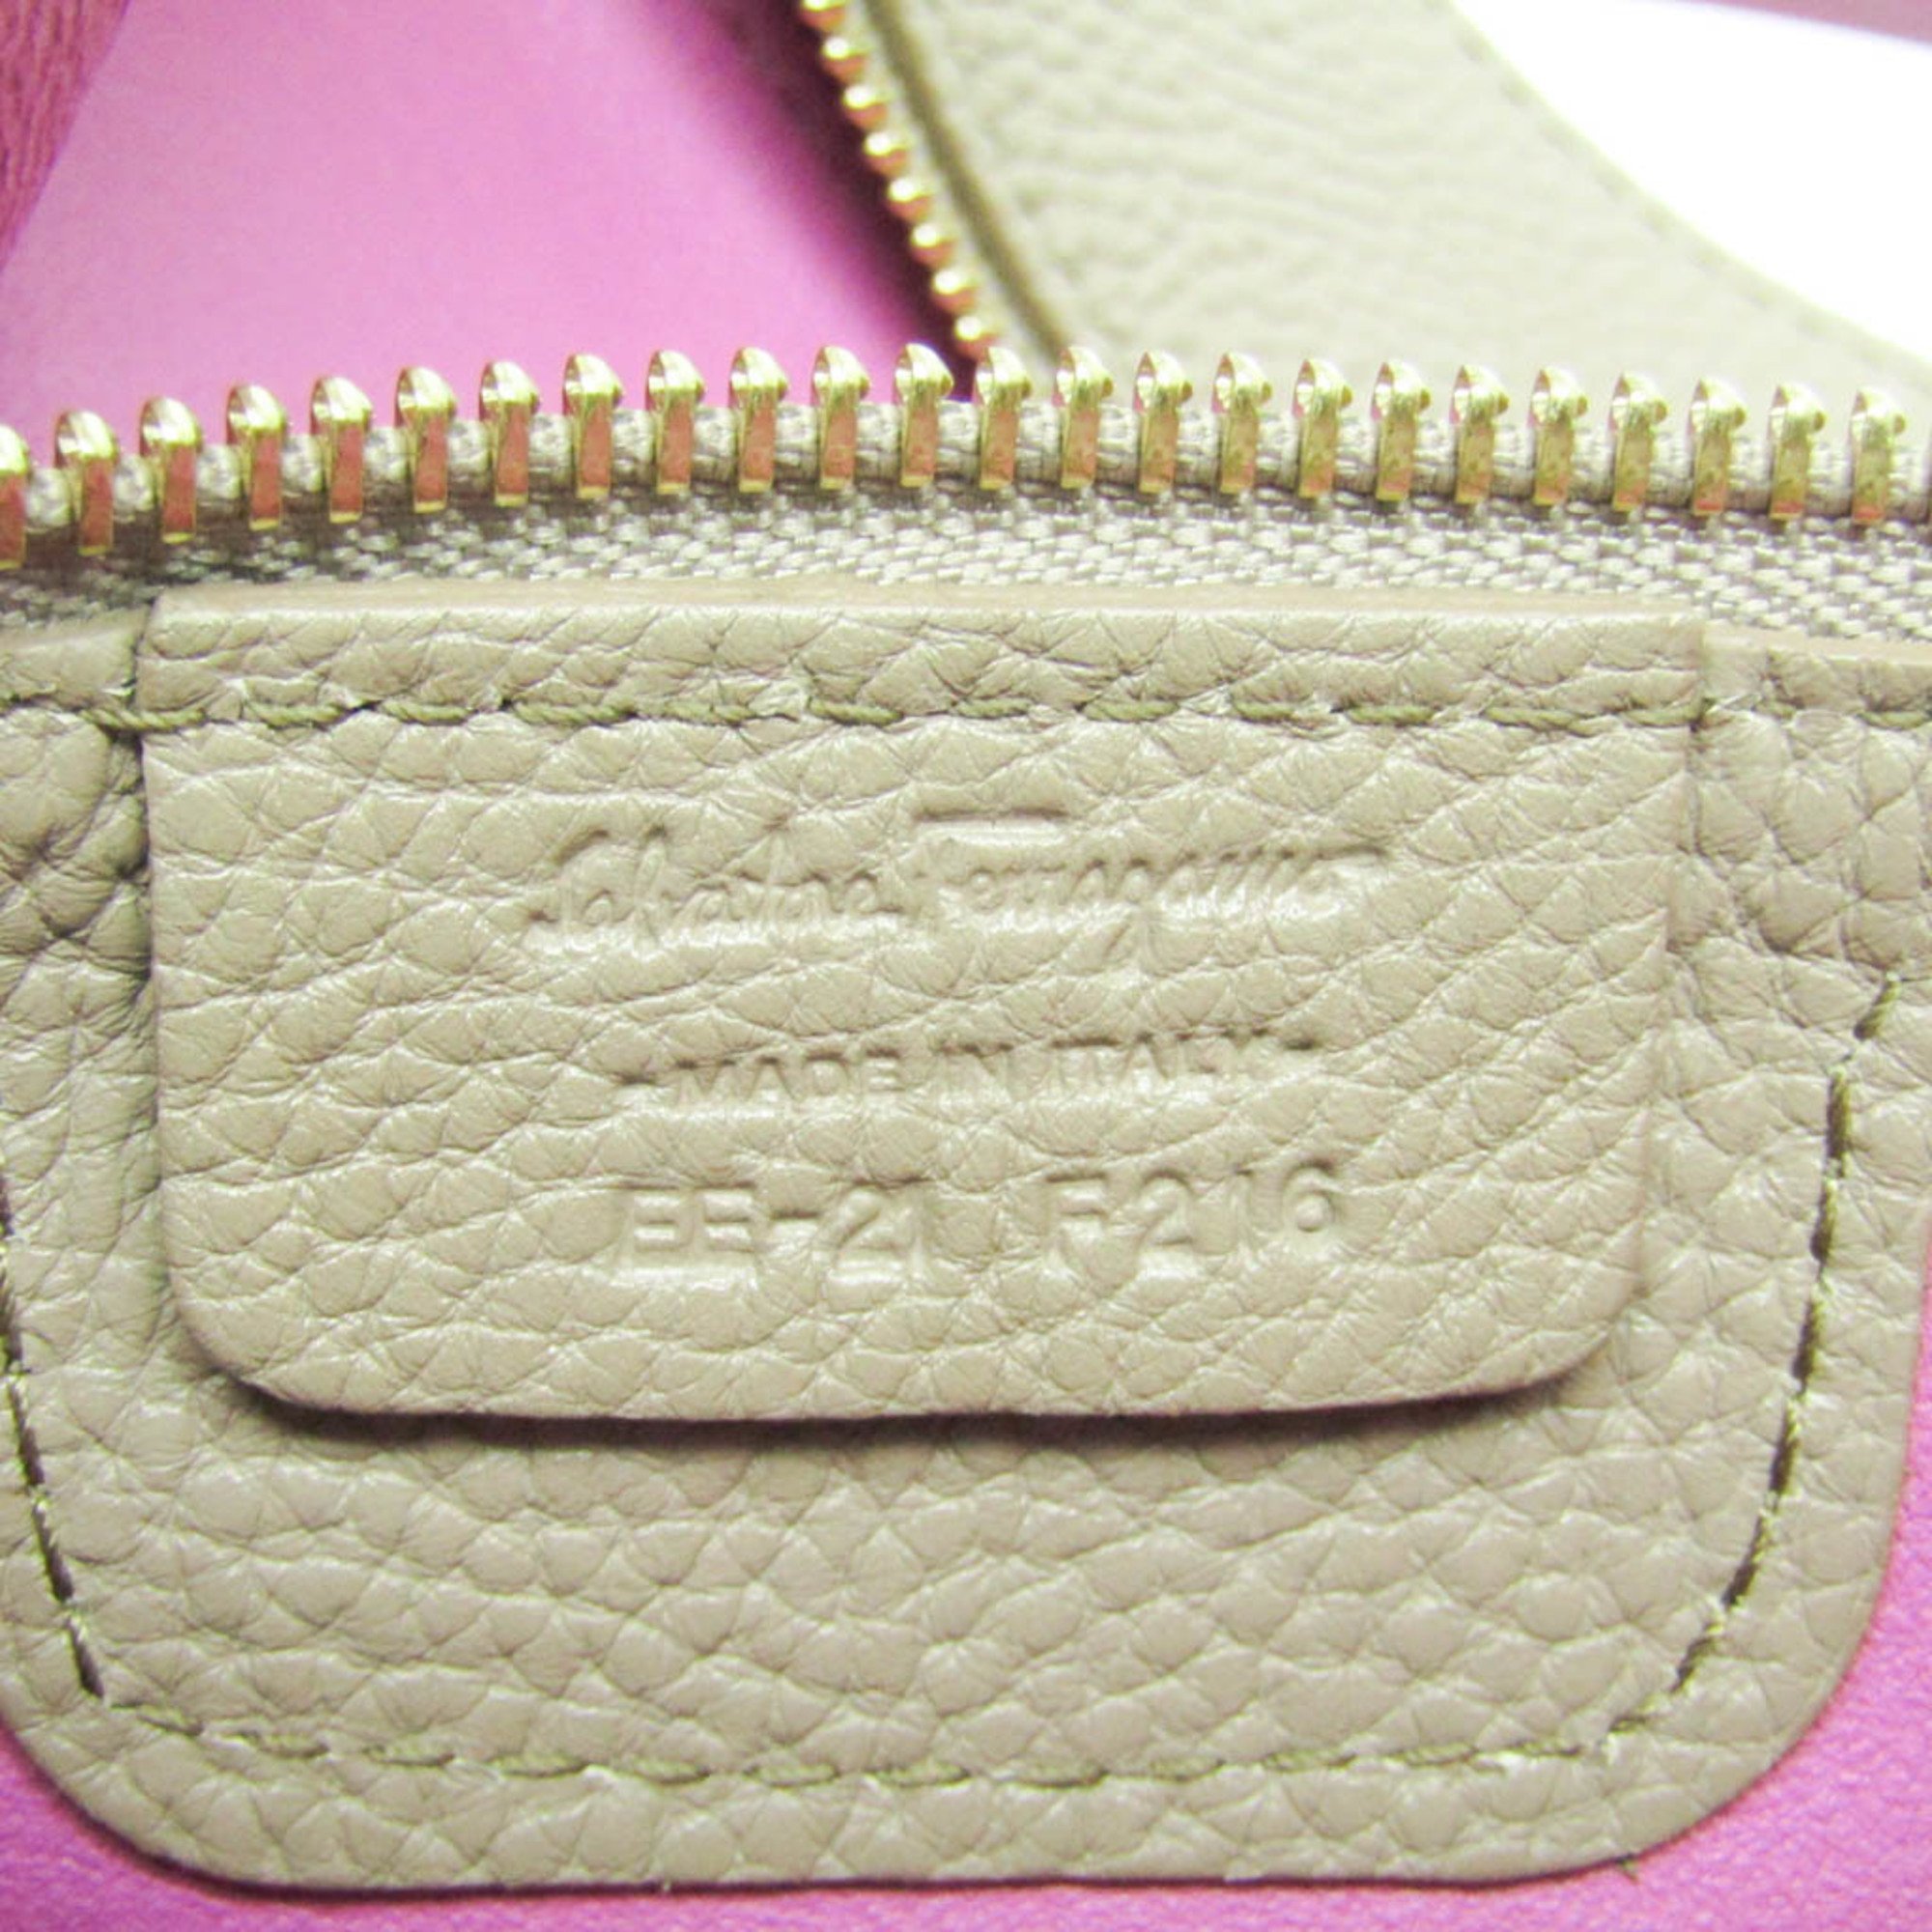 Salvatore Ferragamo AMY EE-21 F216 Women's Leather Tote Bag Pink Beige